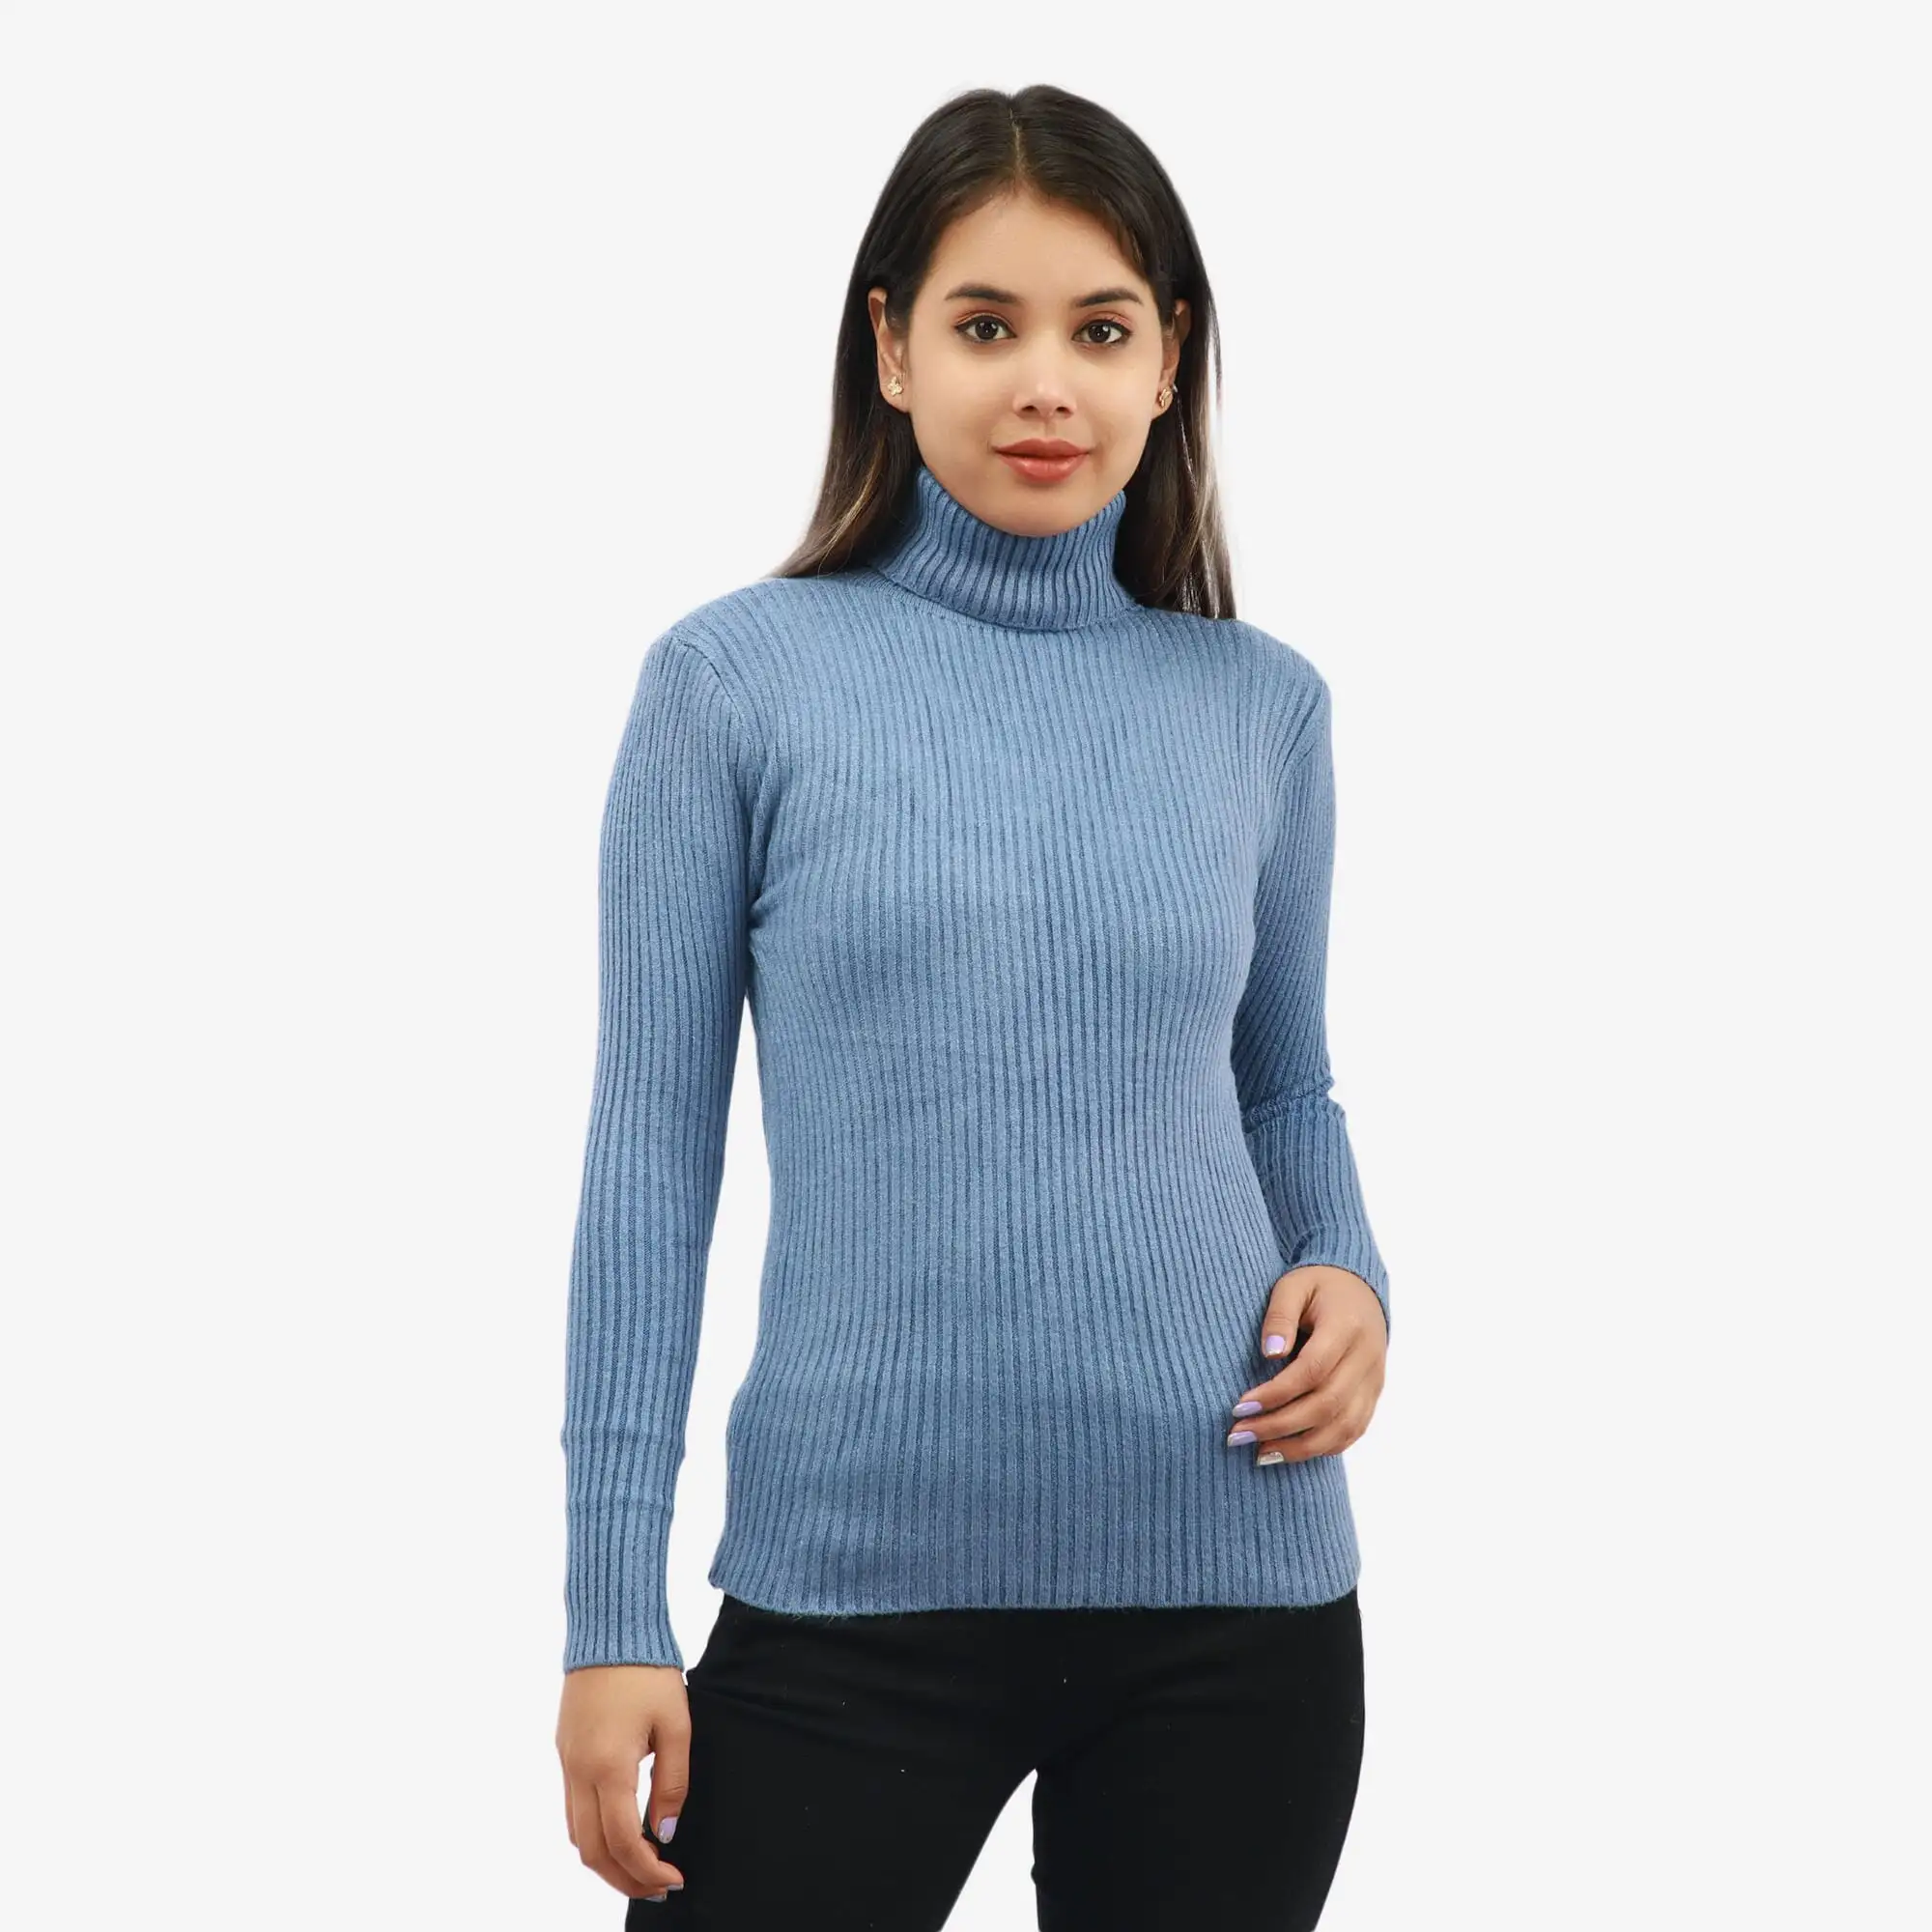 Creamy Woolen Full Sleeves Highneck For Women in Nepal - Buy